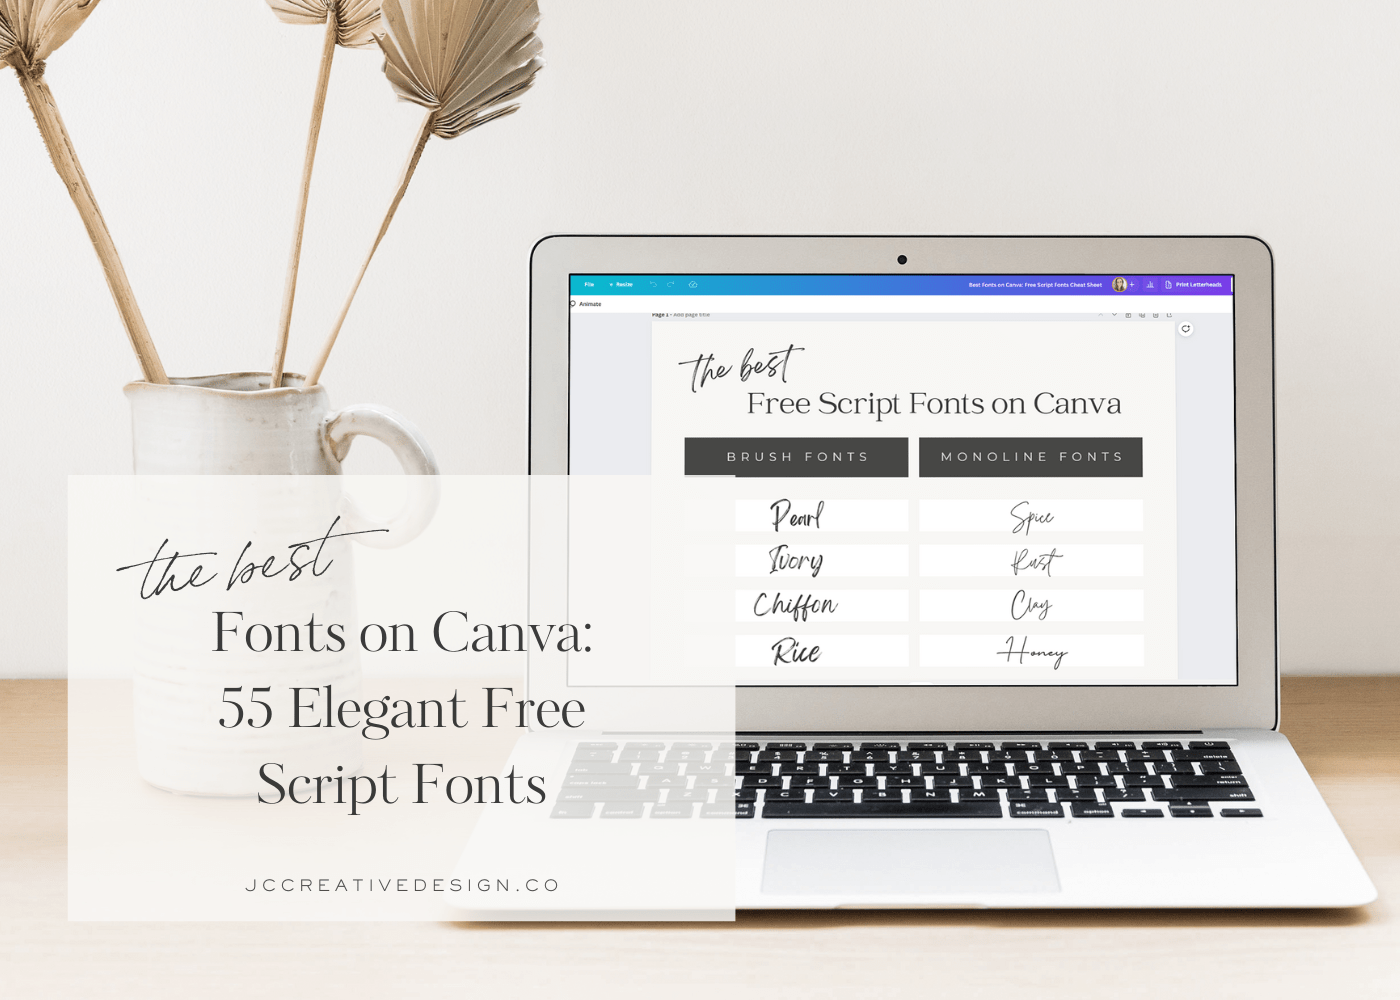 The 55 best fonts on Canva - list of elegant free script and cursive fonts